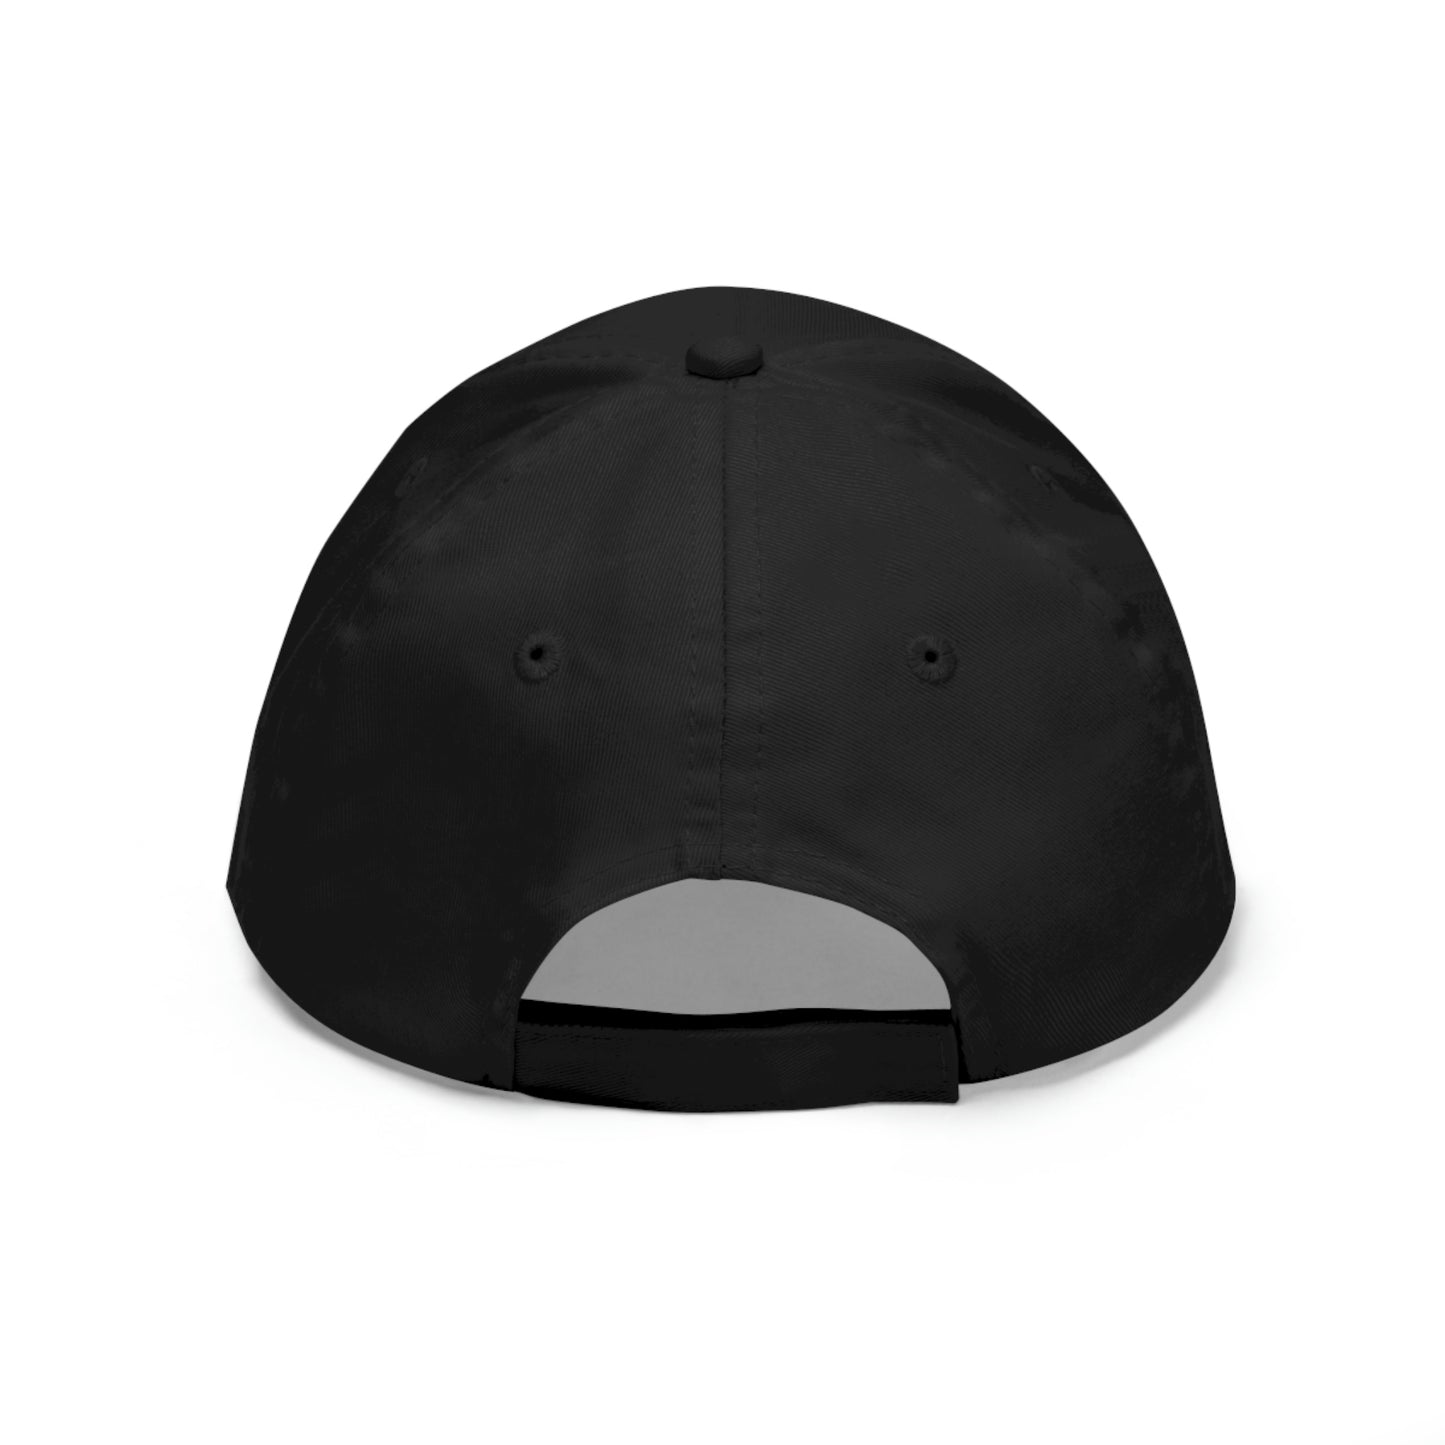 Copy of Standing Supernaturally Hat - Black